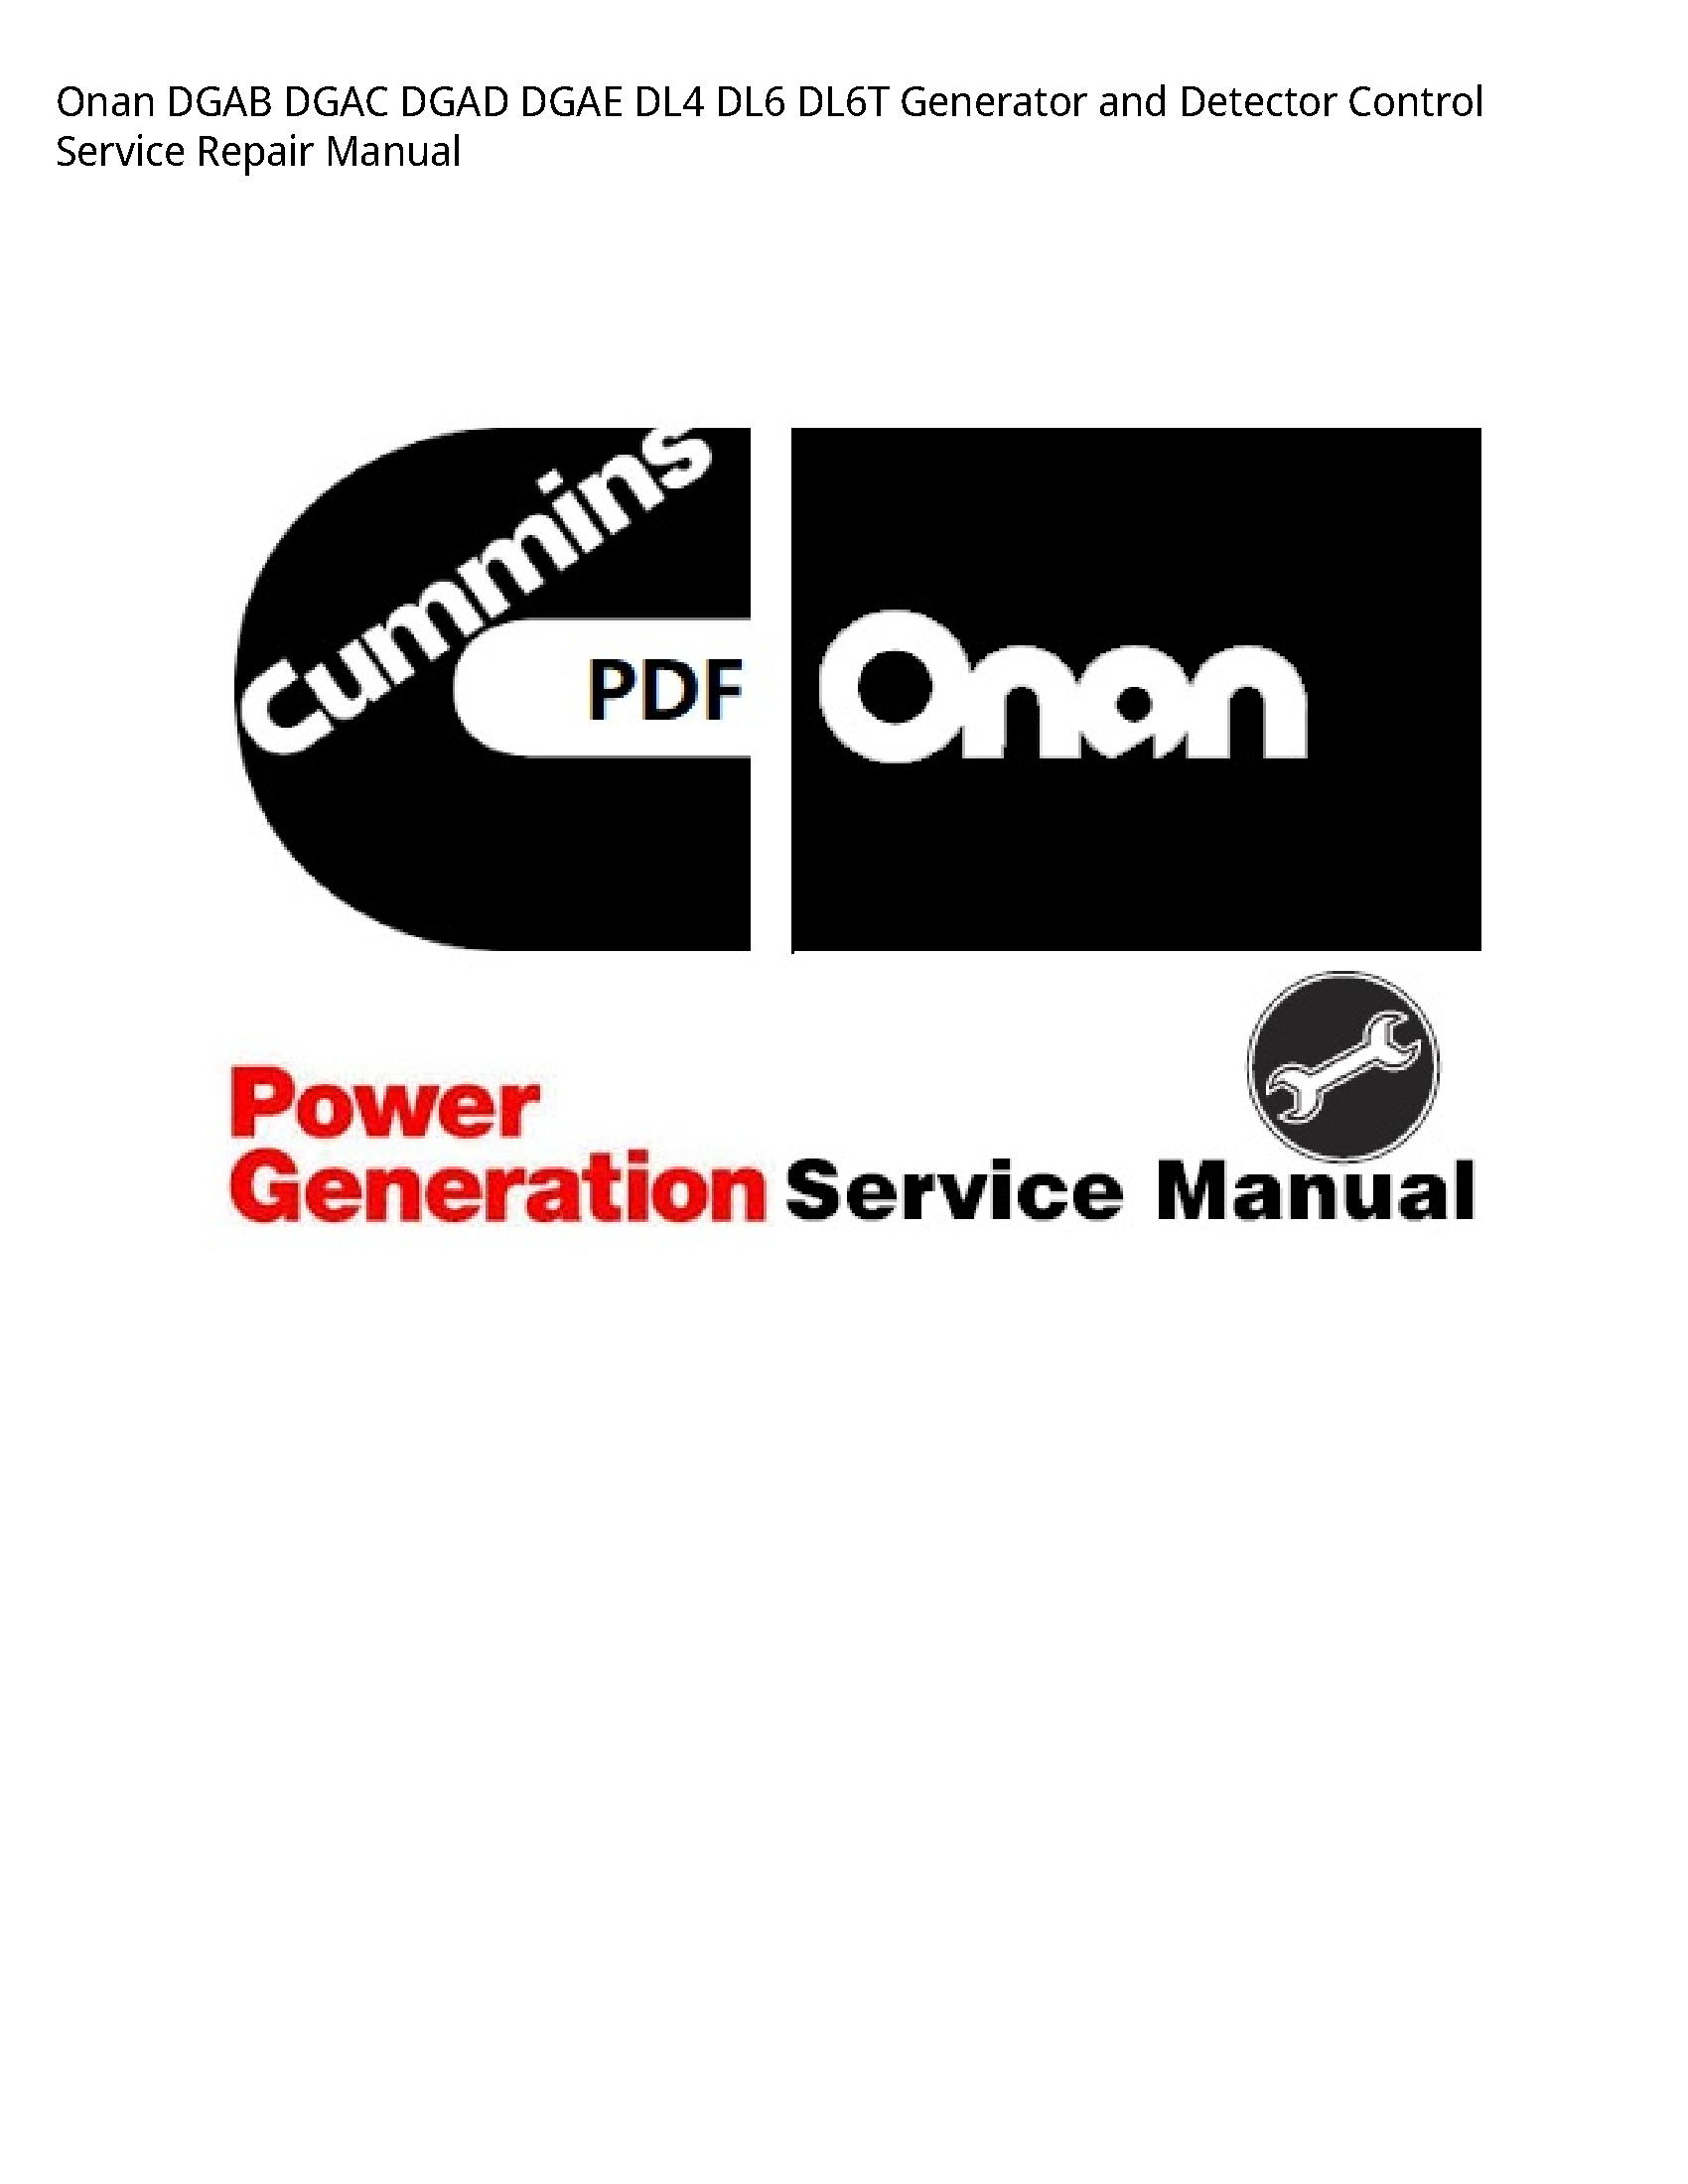 Onan DL4 DGAB DGAC DGAD DGAE Generator  Detector Control manual